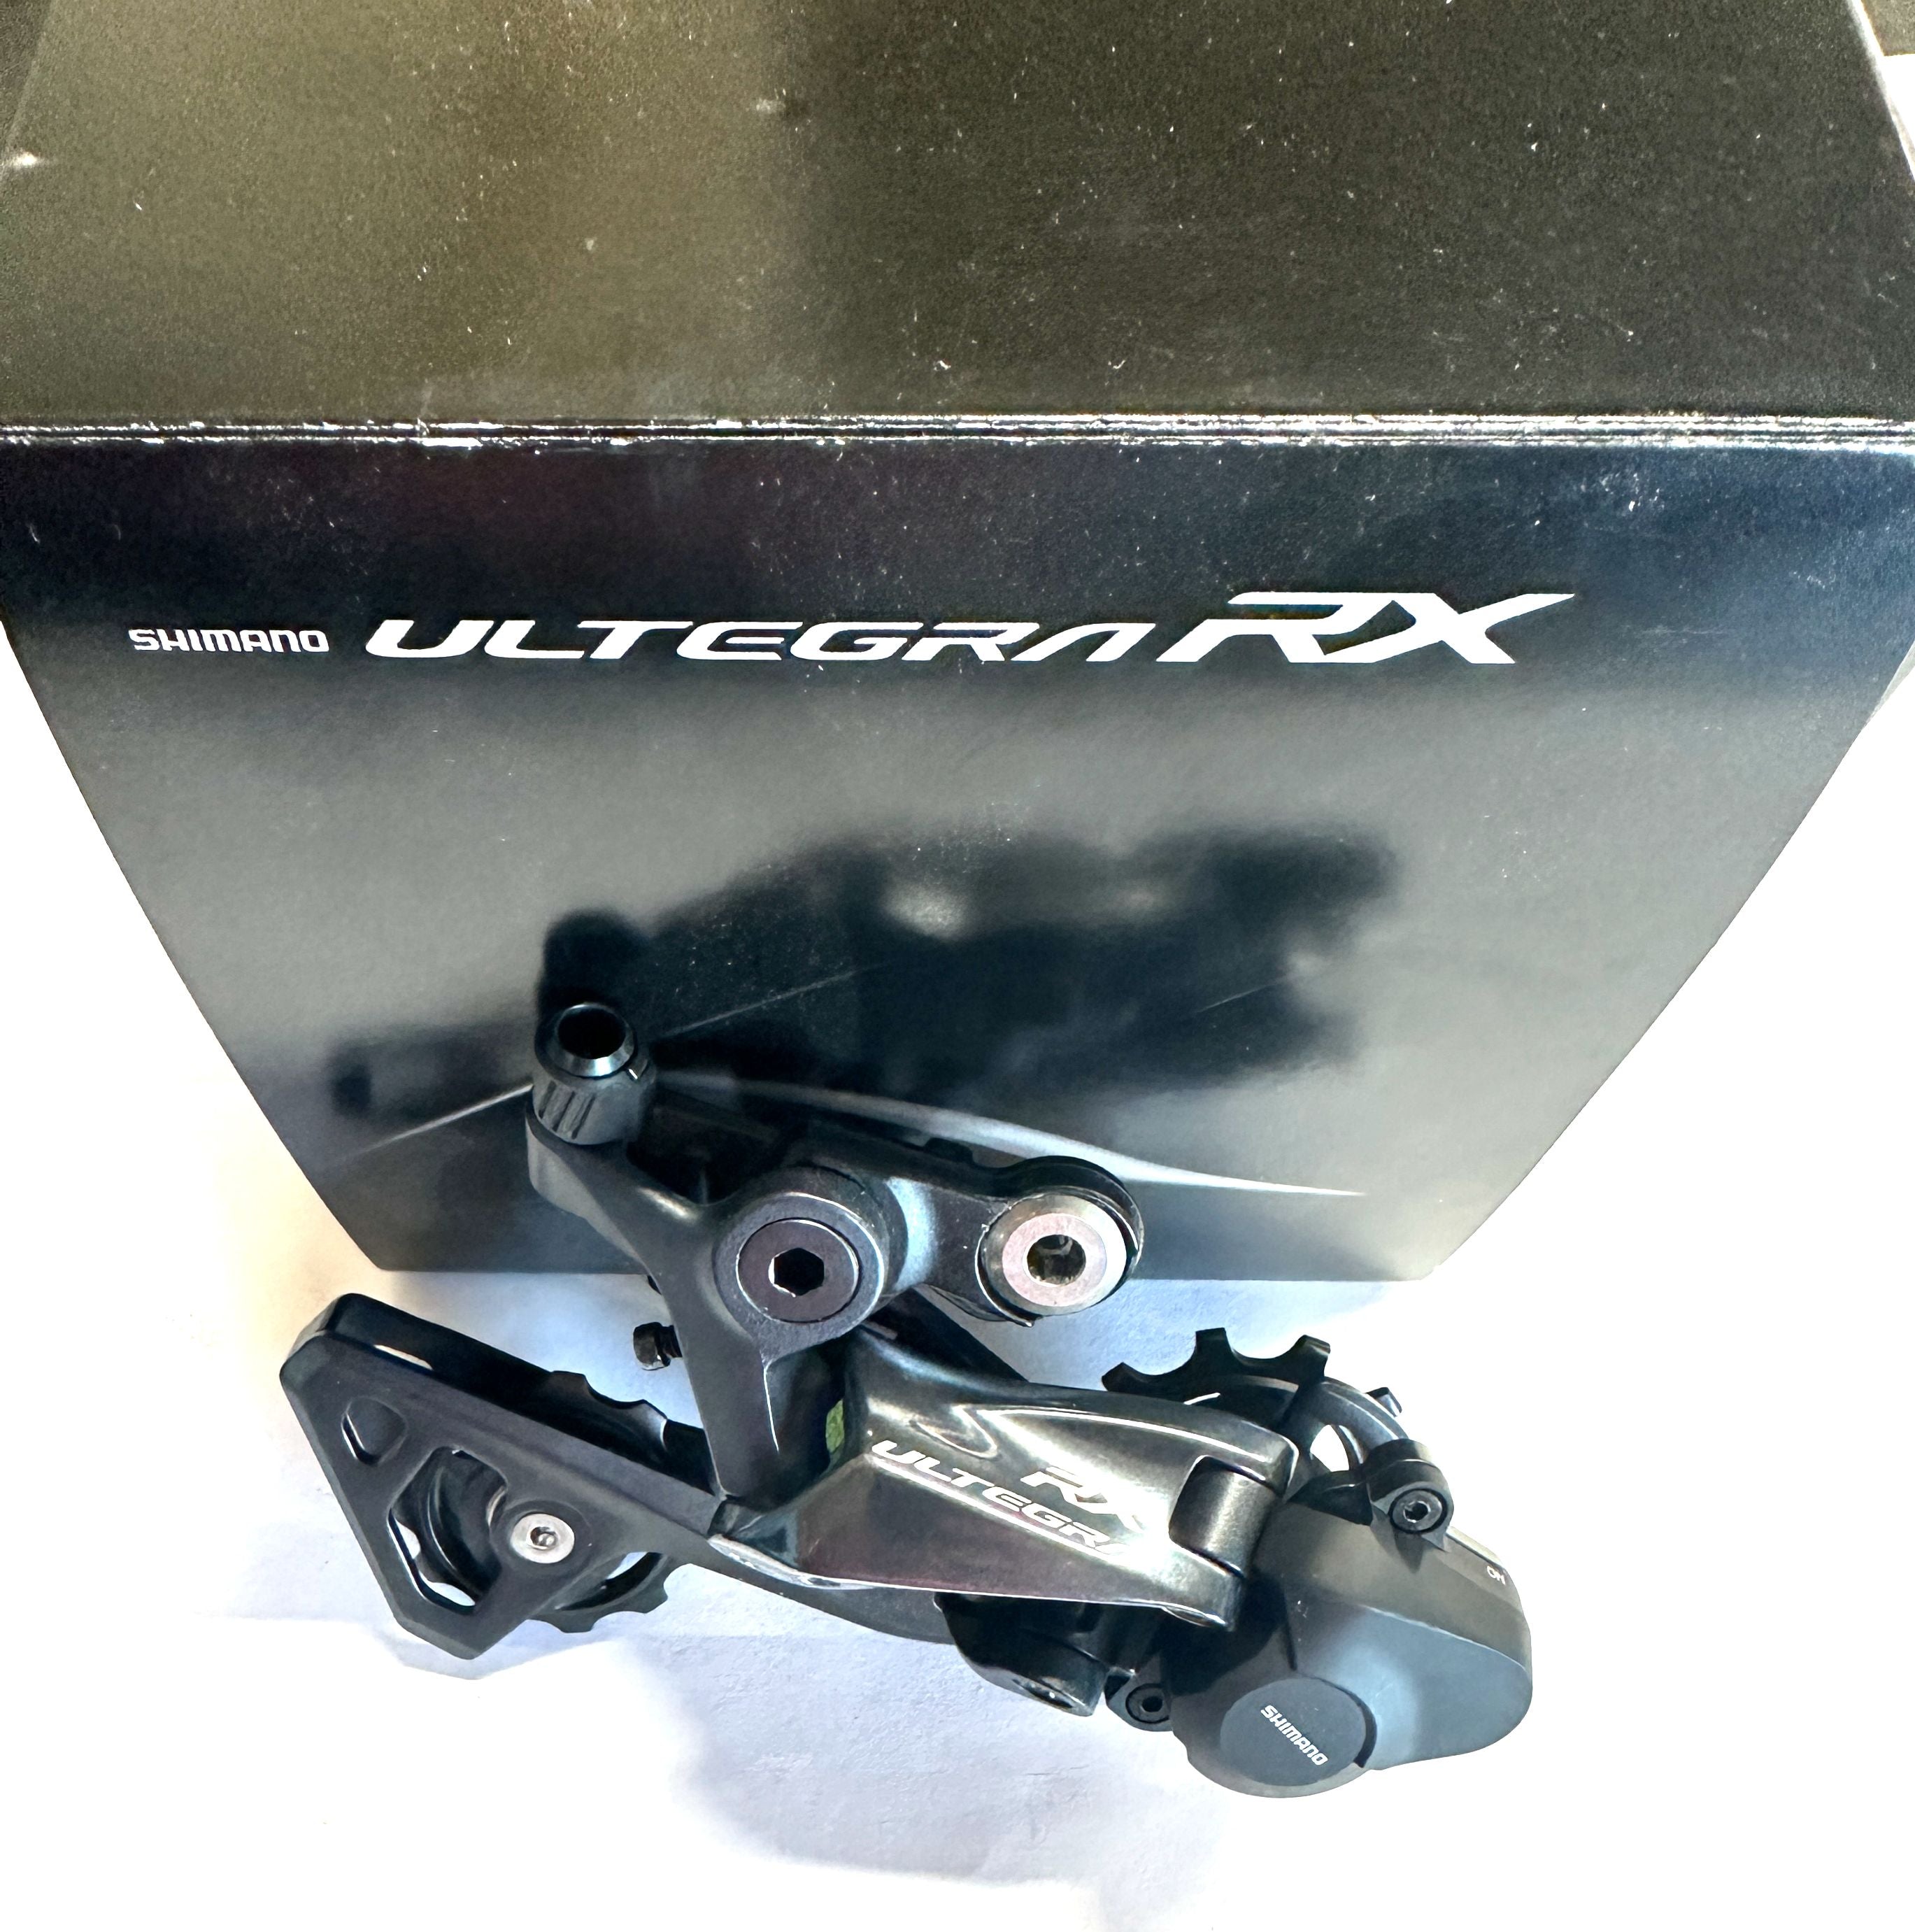 SHIMANO Ultegra RX RD-RX800-GS 11 Spd Rear Derailleur MTB Bike NEW in box